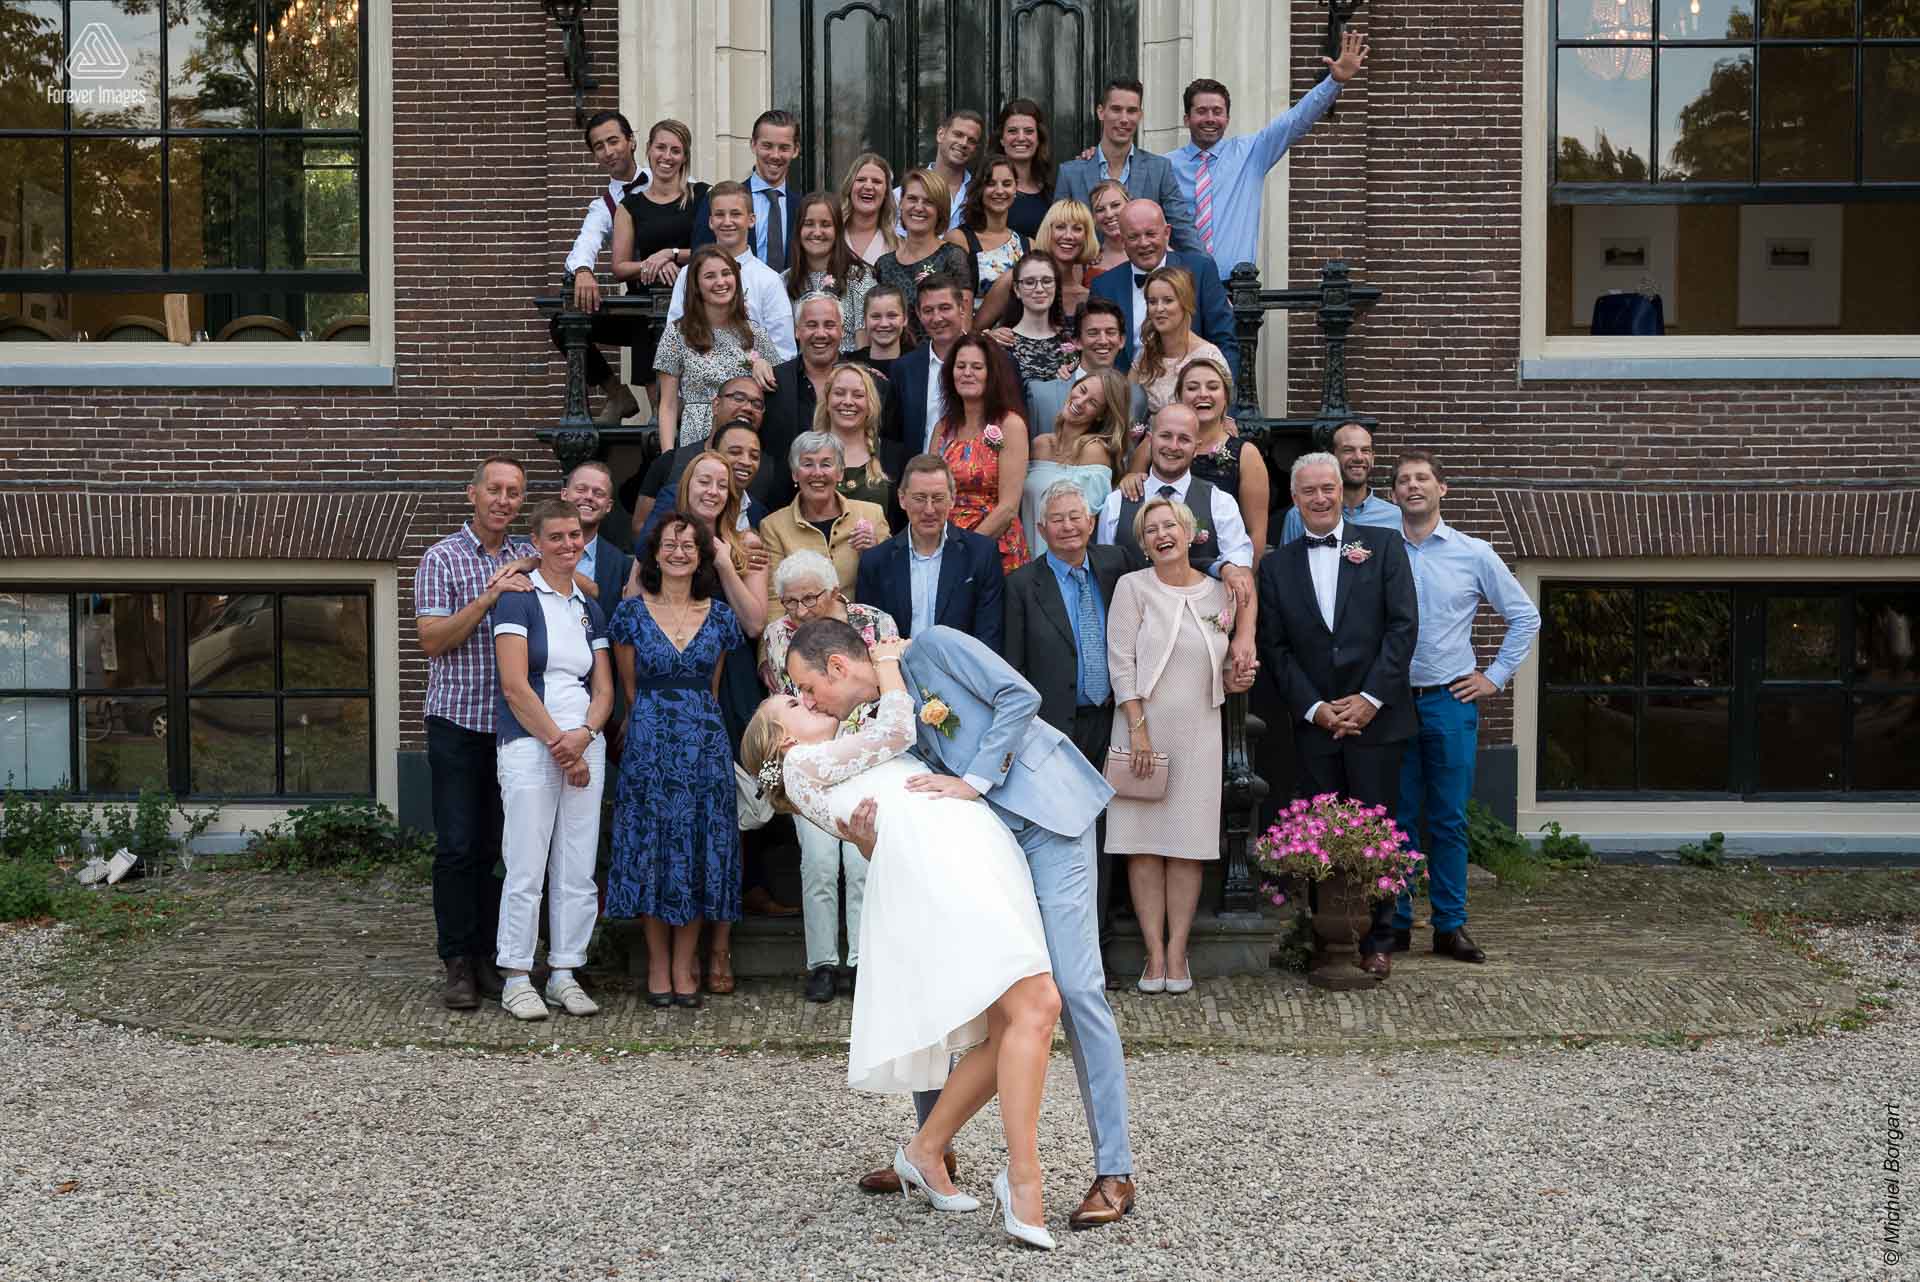 Bruidsfoto bruidspaar kust voor gasten bordes Huize Frankendael Amsterdam | Bart Eefje | Bruidsfotograaf Michiel Borgart - Forever Images.